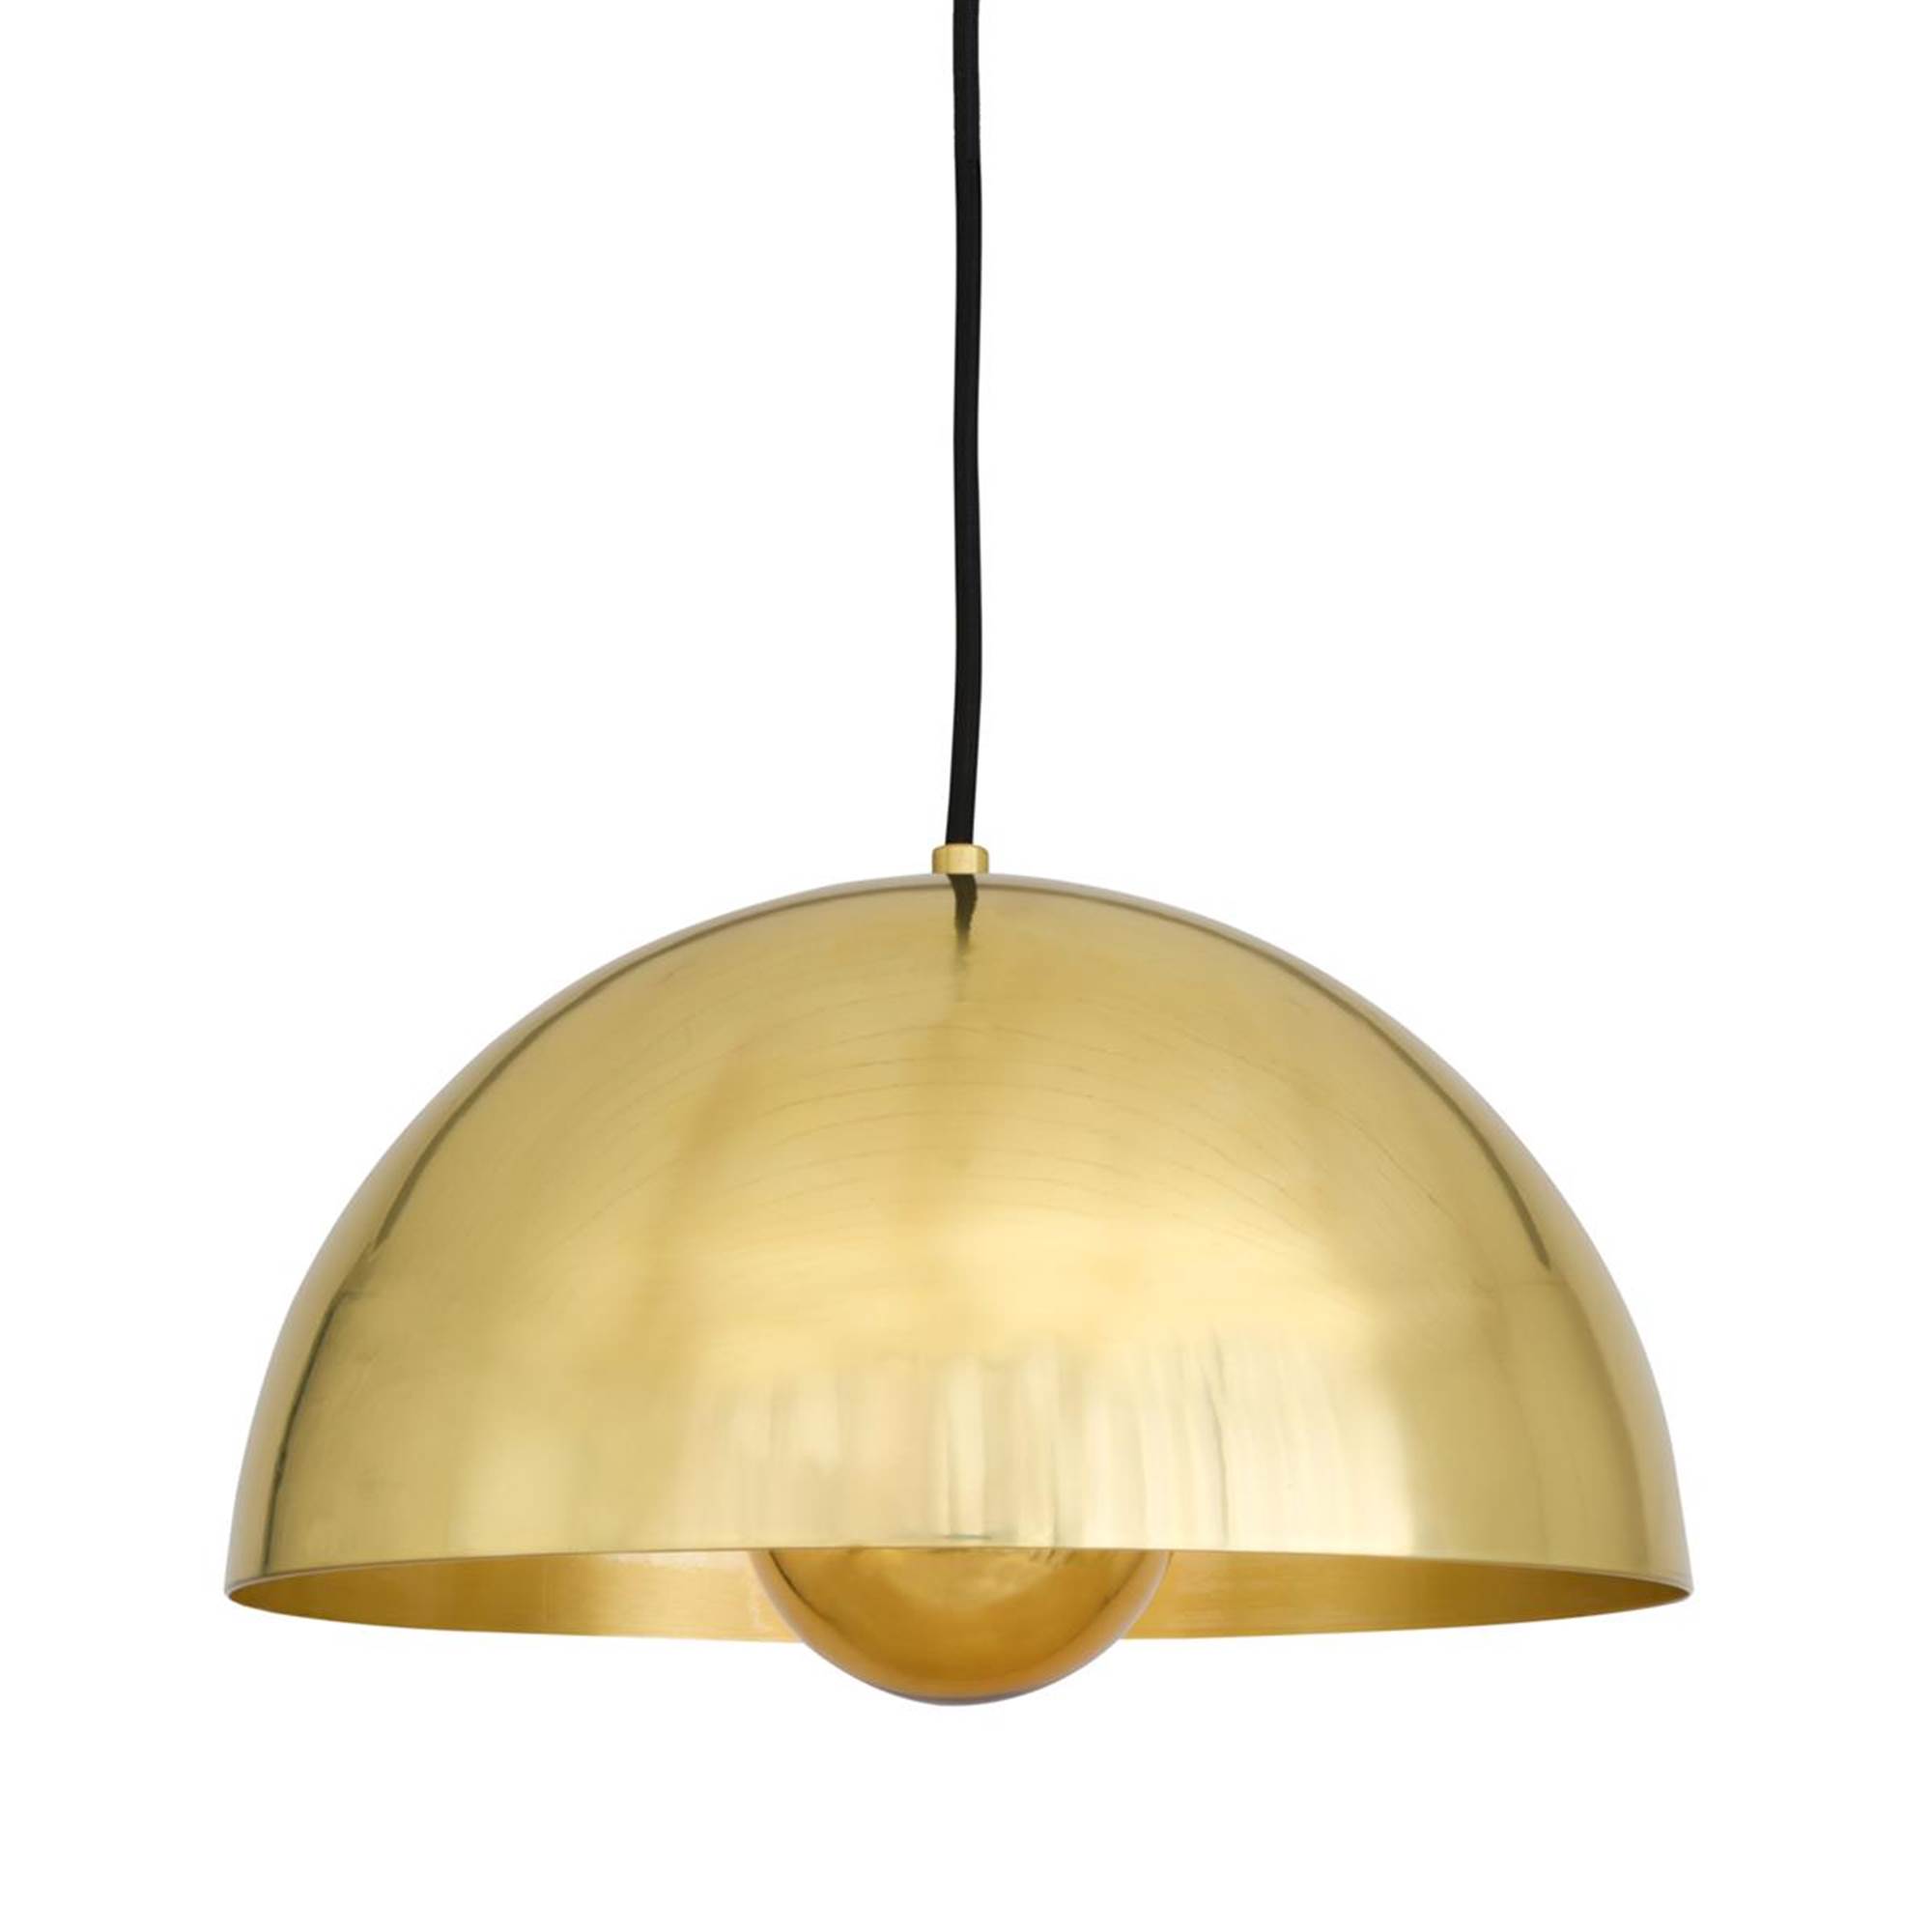 Mullan Lighting Maua 30 cm Industrial Dome Pendant - Antique Brass